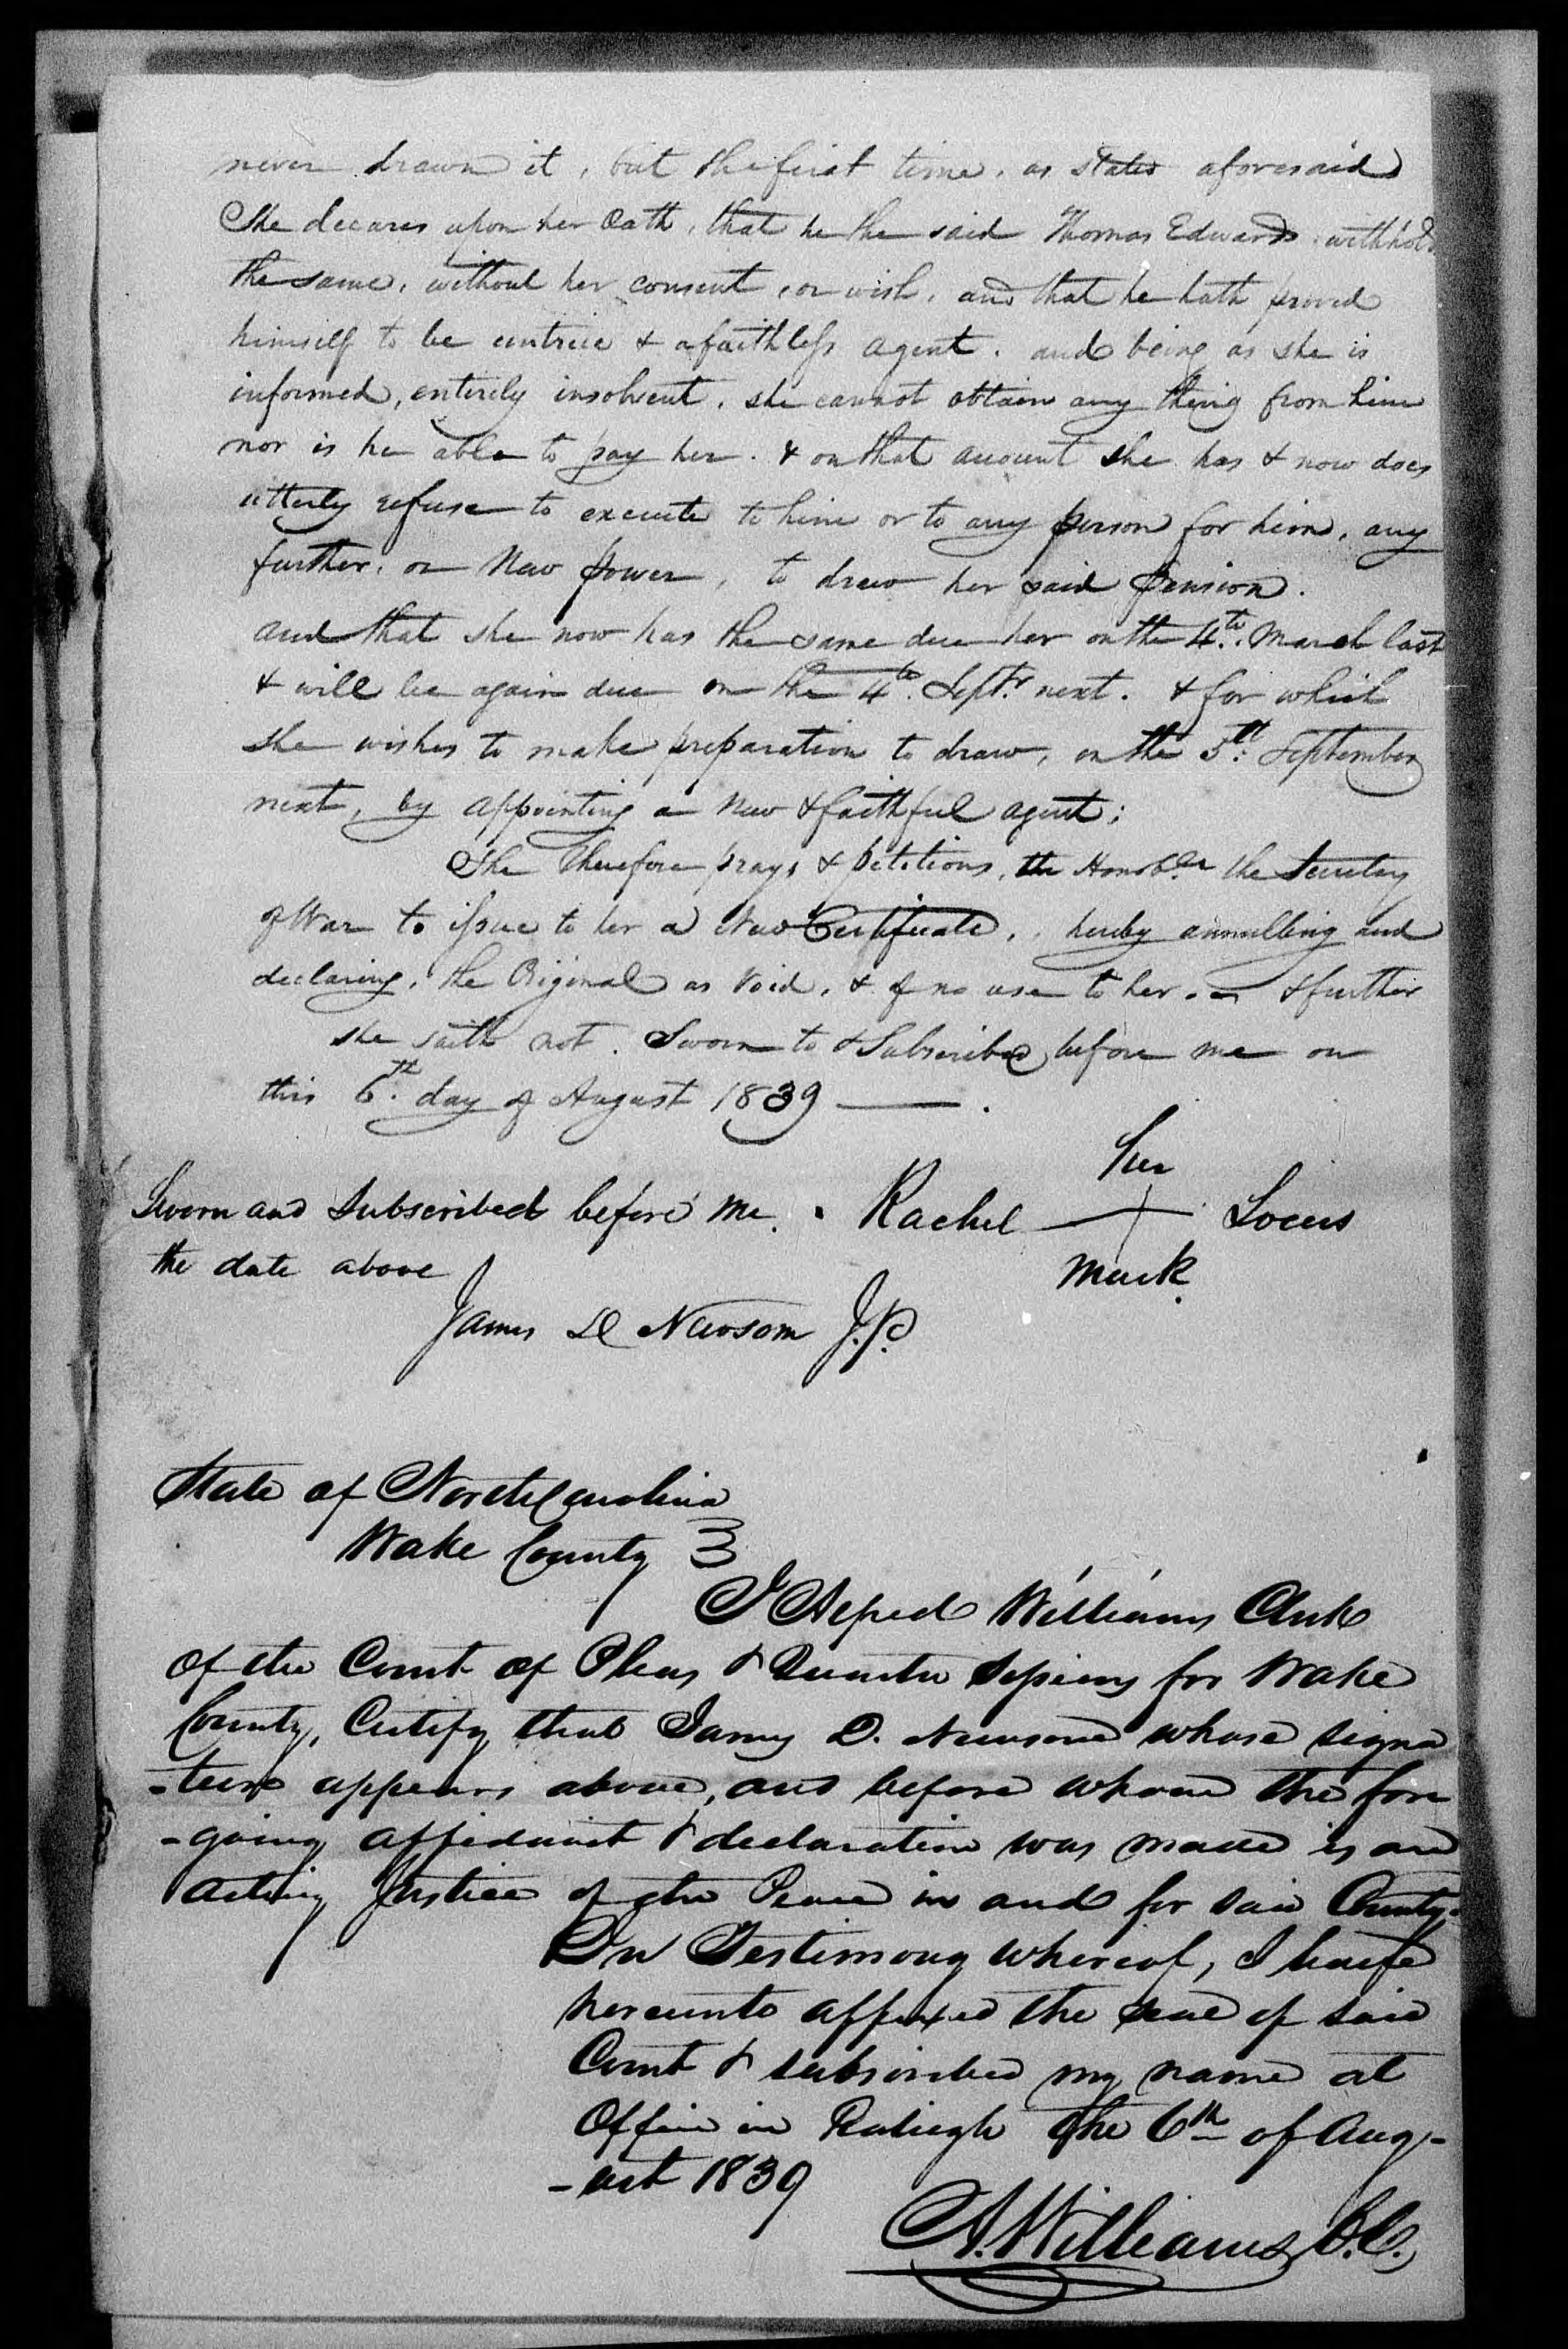 Affidavit of Rachel Locus concerning her Pension Claim, 6 August 1839, page 2